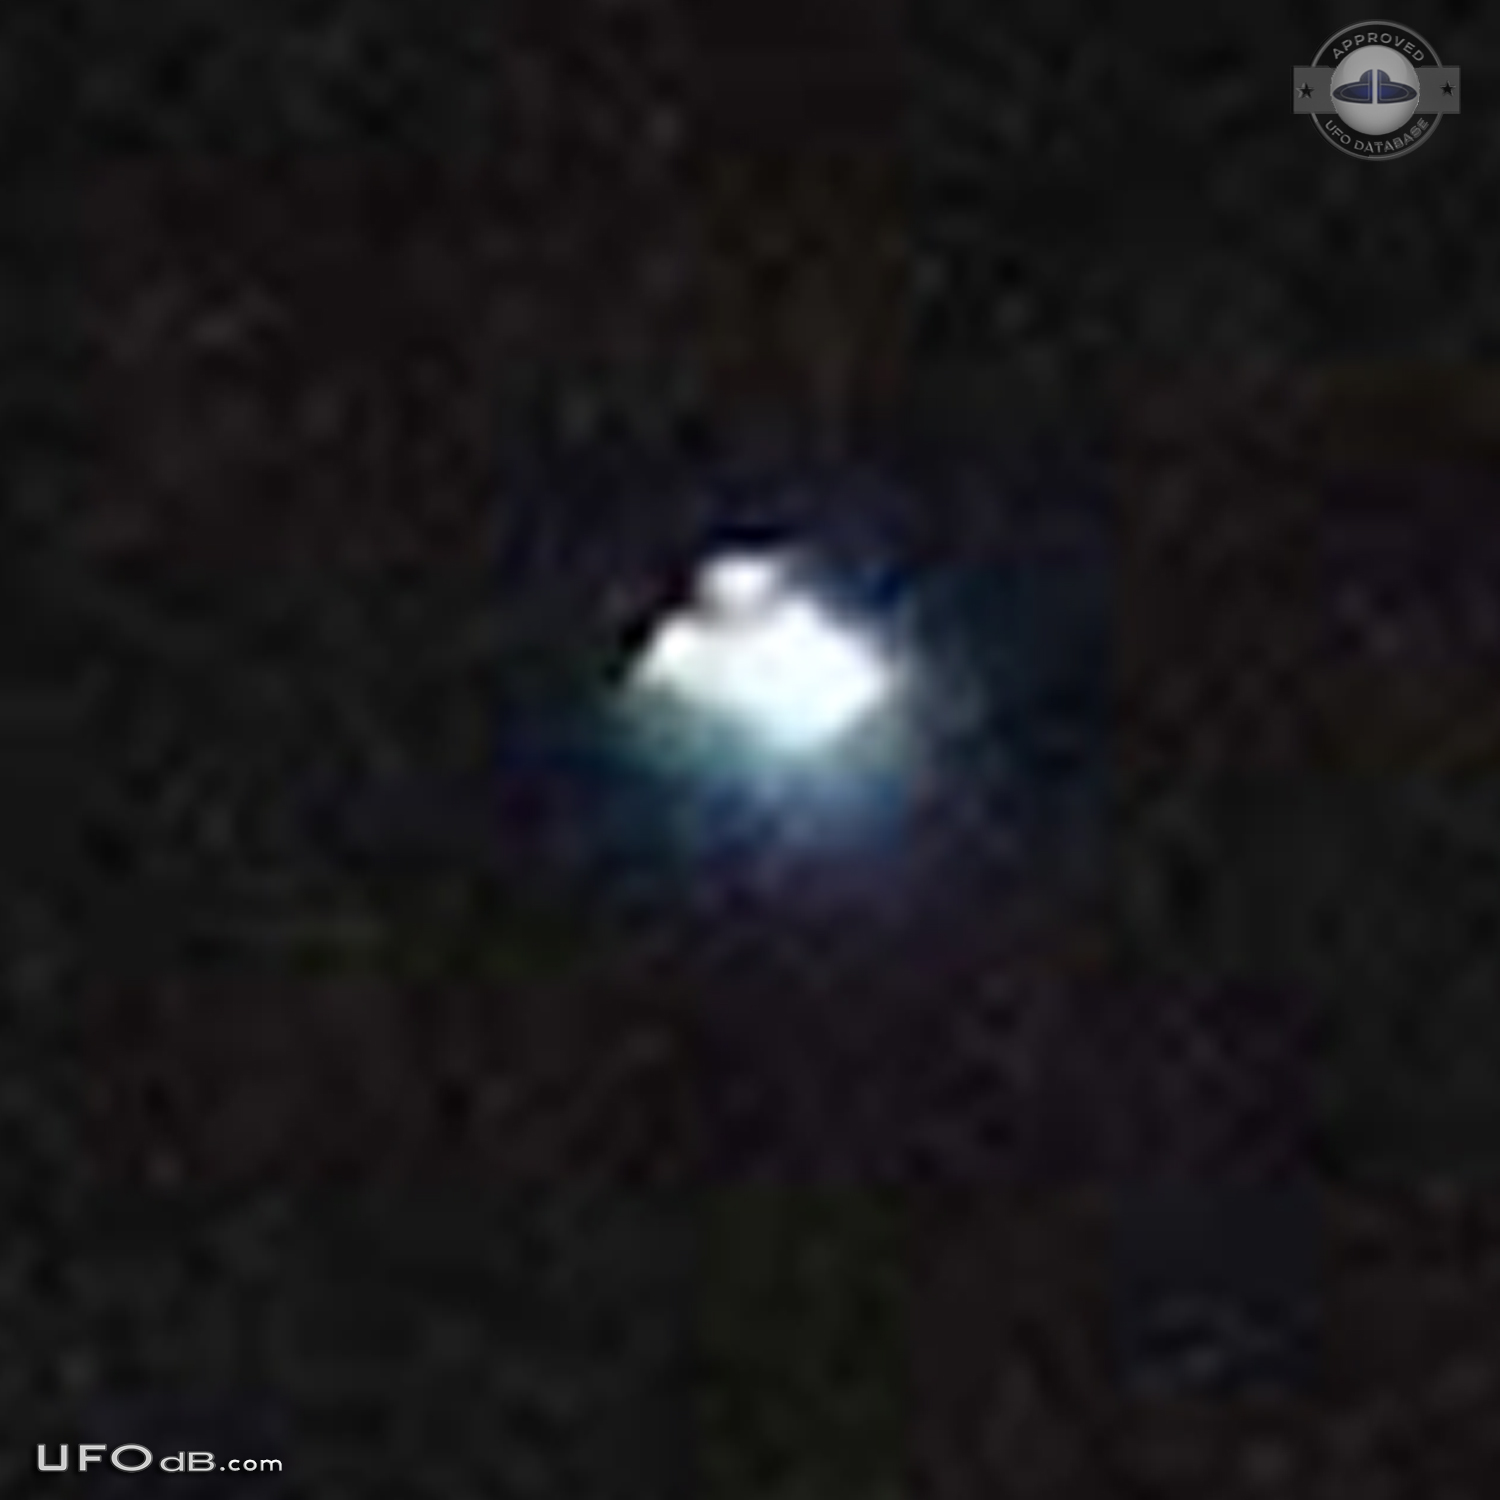 Moon picture reveals bright UFO in the night sky in Ecuador in 2009 UFO Picture #446-4